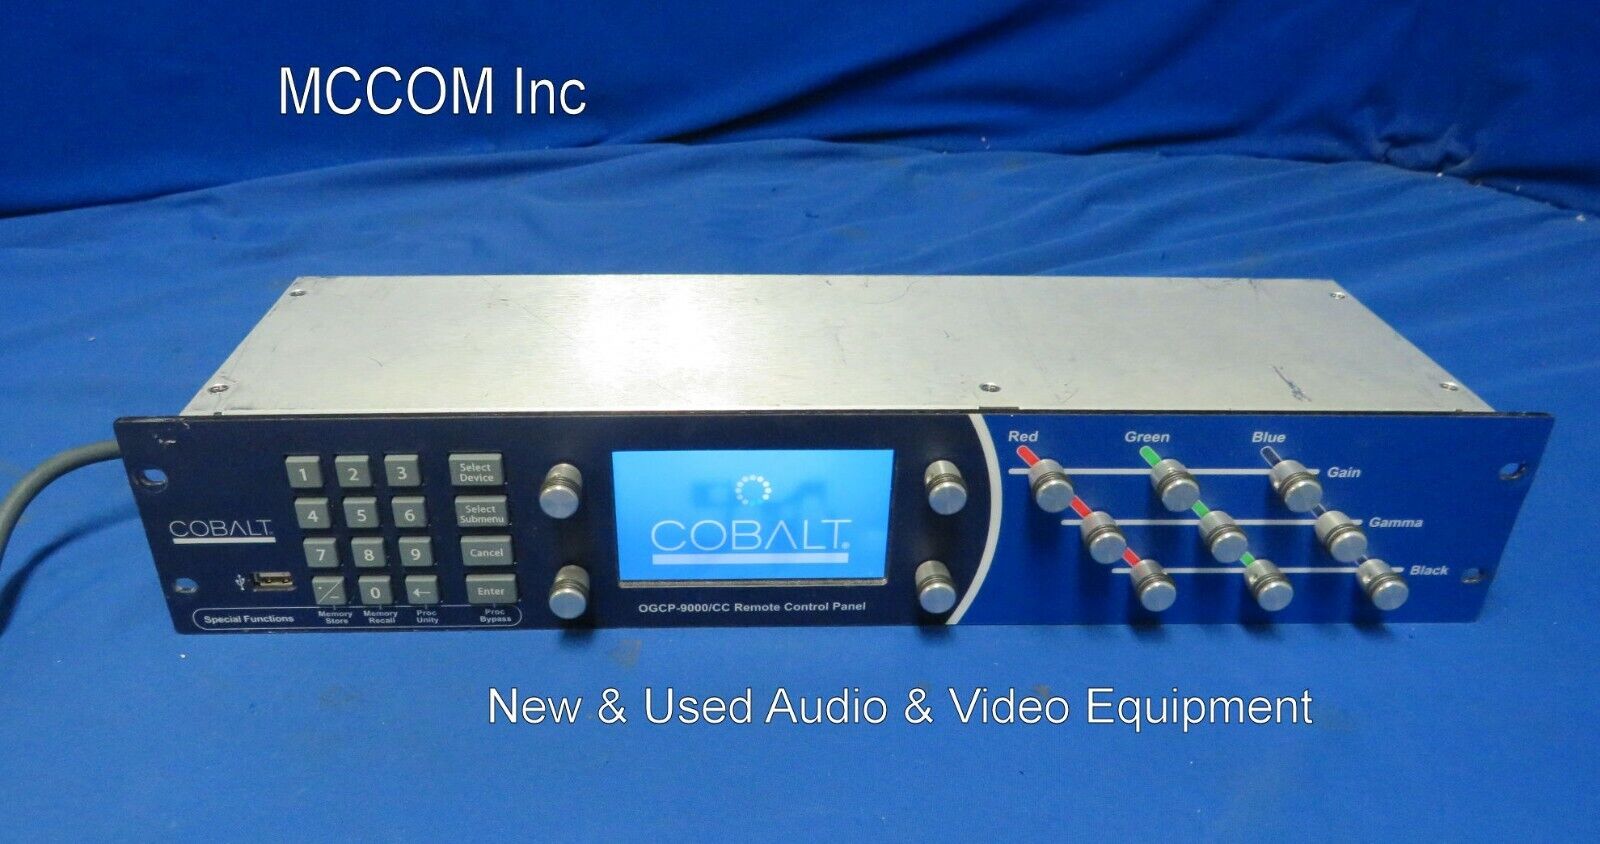 Cobalt Ogcp-9000/cc Remote Control Panel